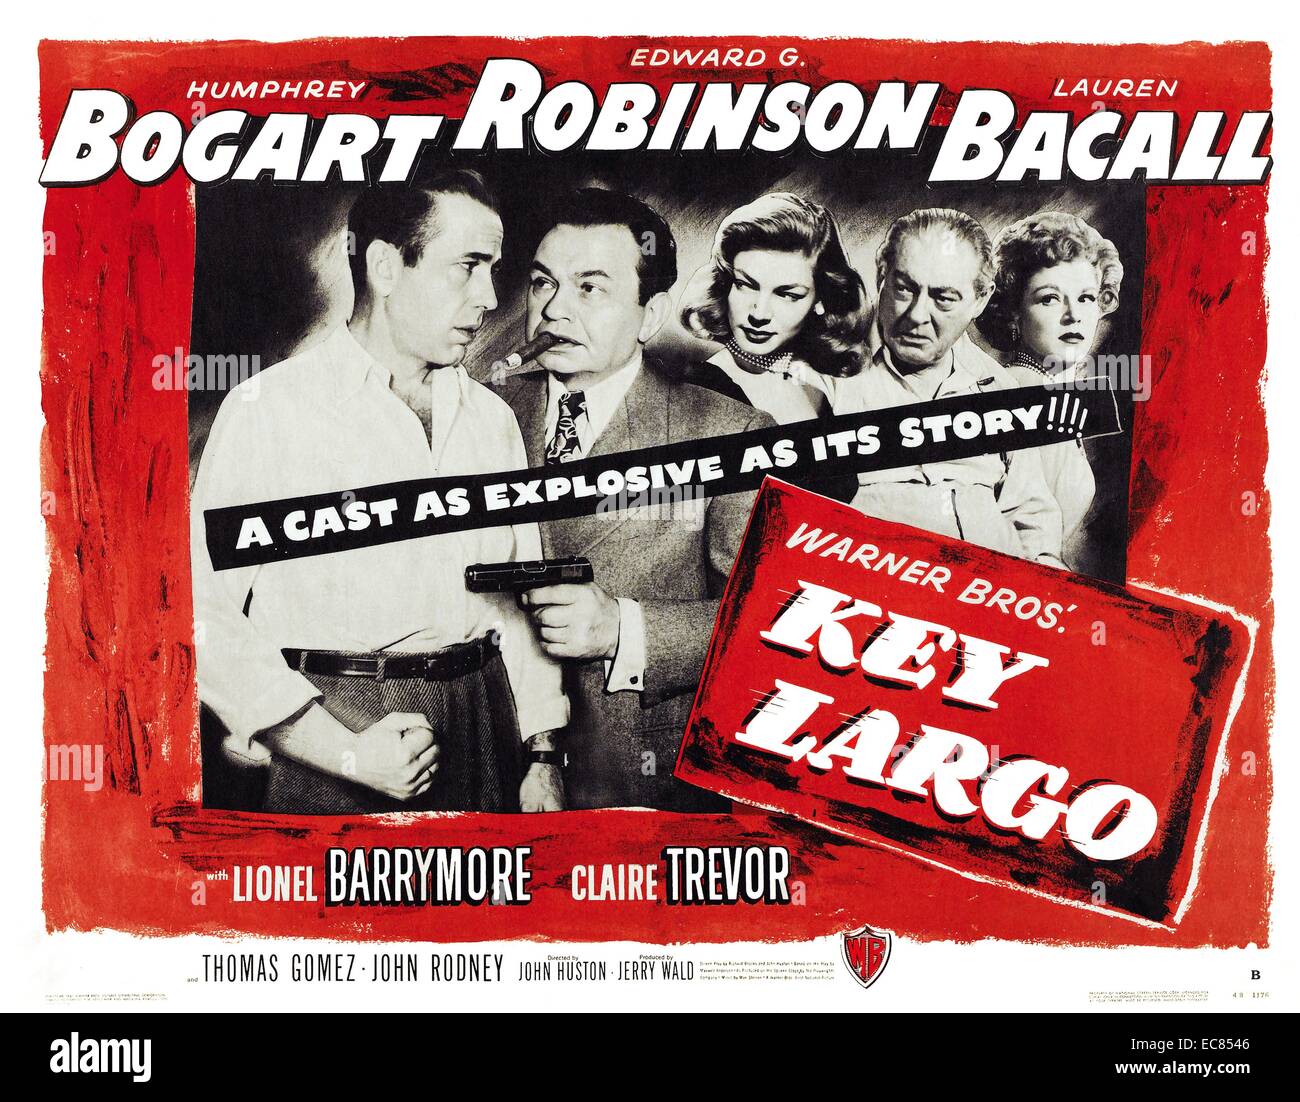 Film poster for Key Largo staring Humphrey Bogart, Edward G. Robinson, Lauren Bacall. Dated 1948 Stock Photo